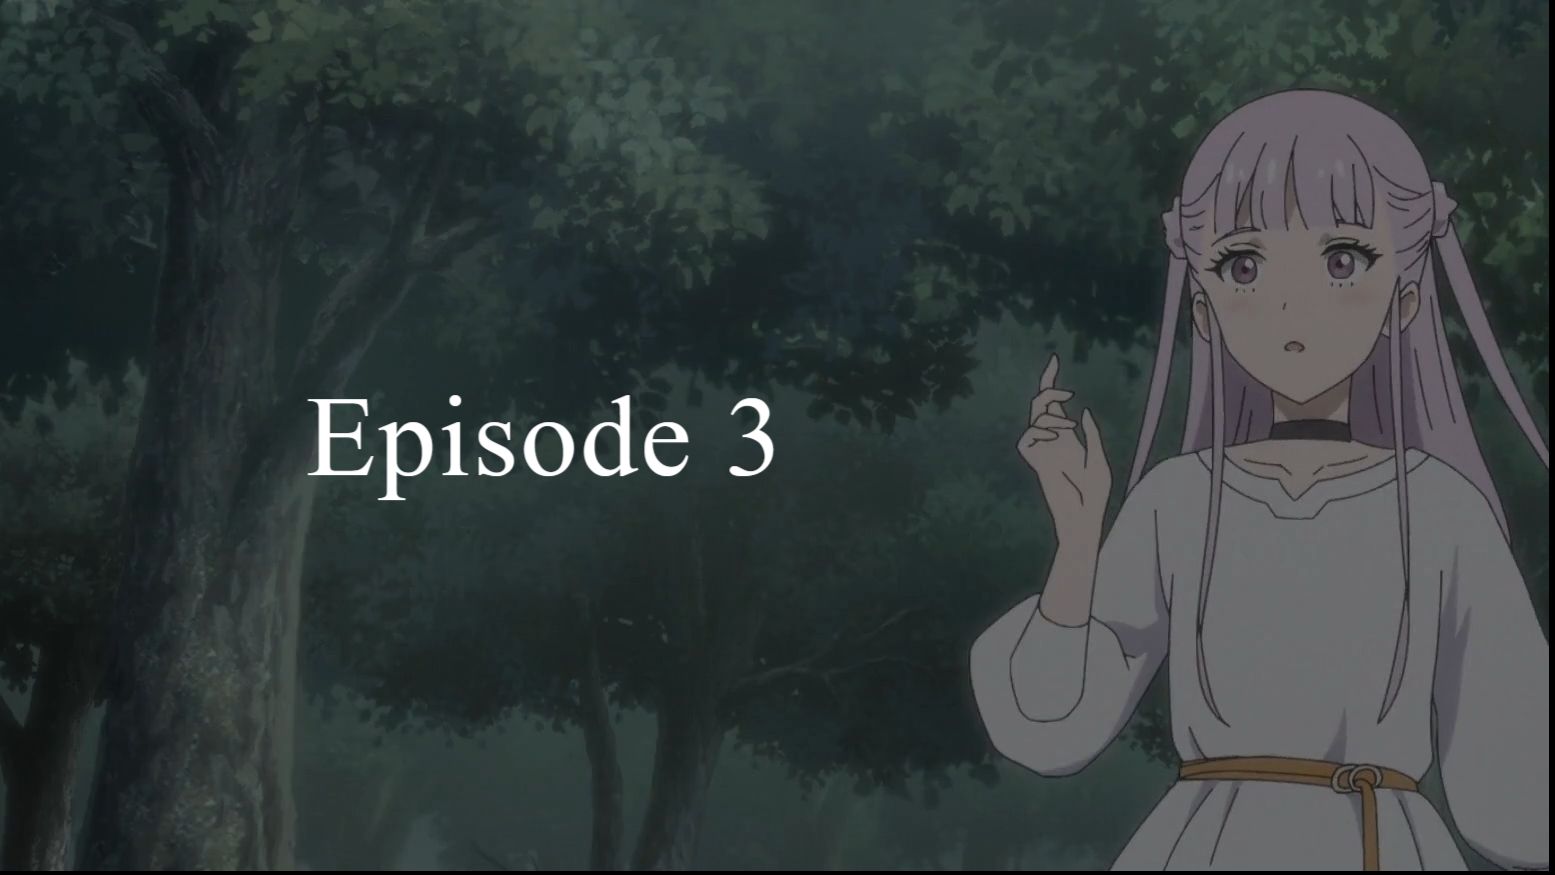 Ars no Kyojuu Episode 12 Preview 